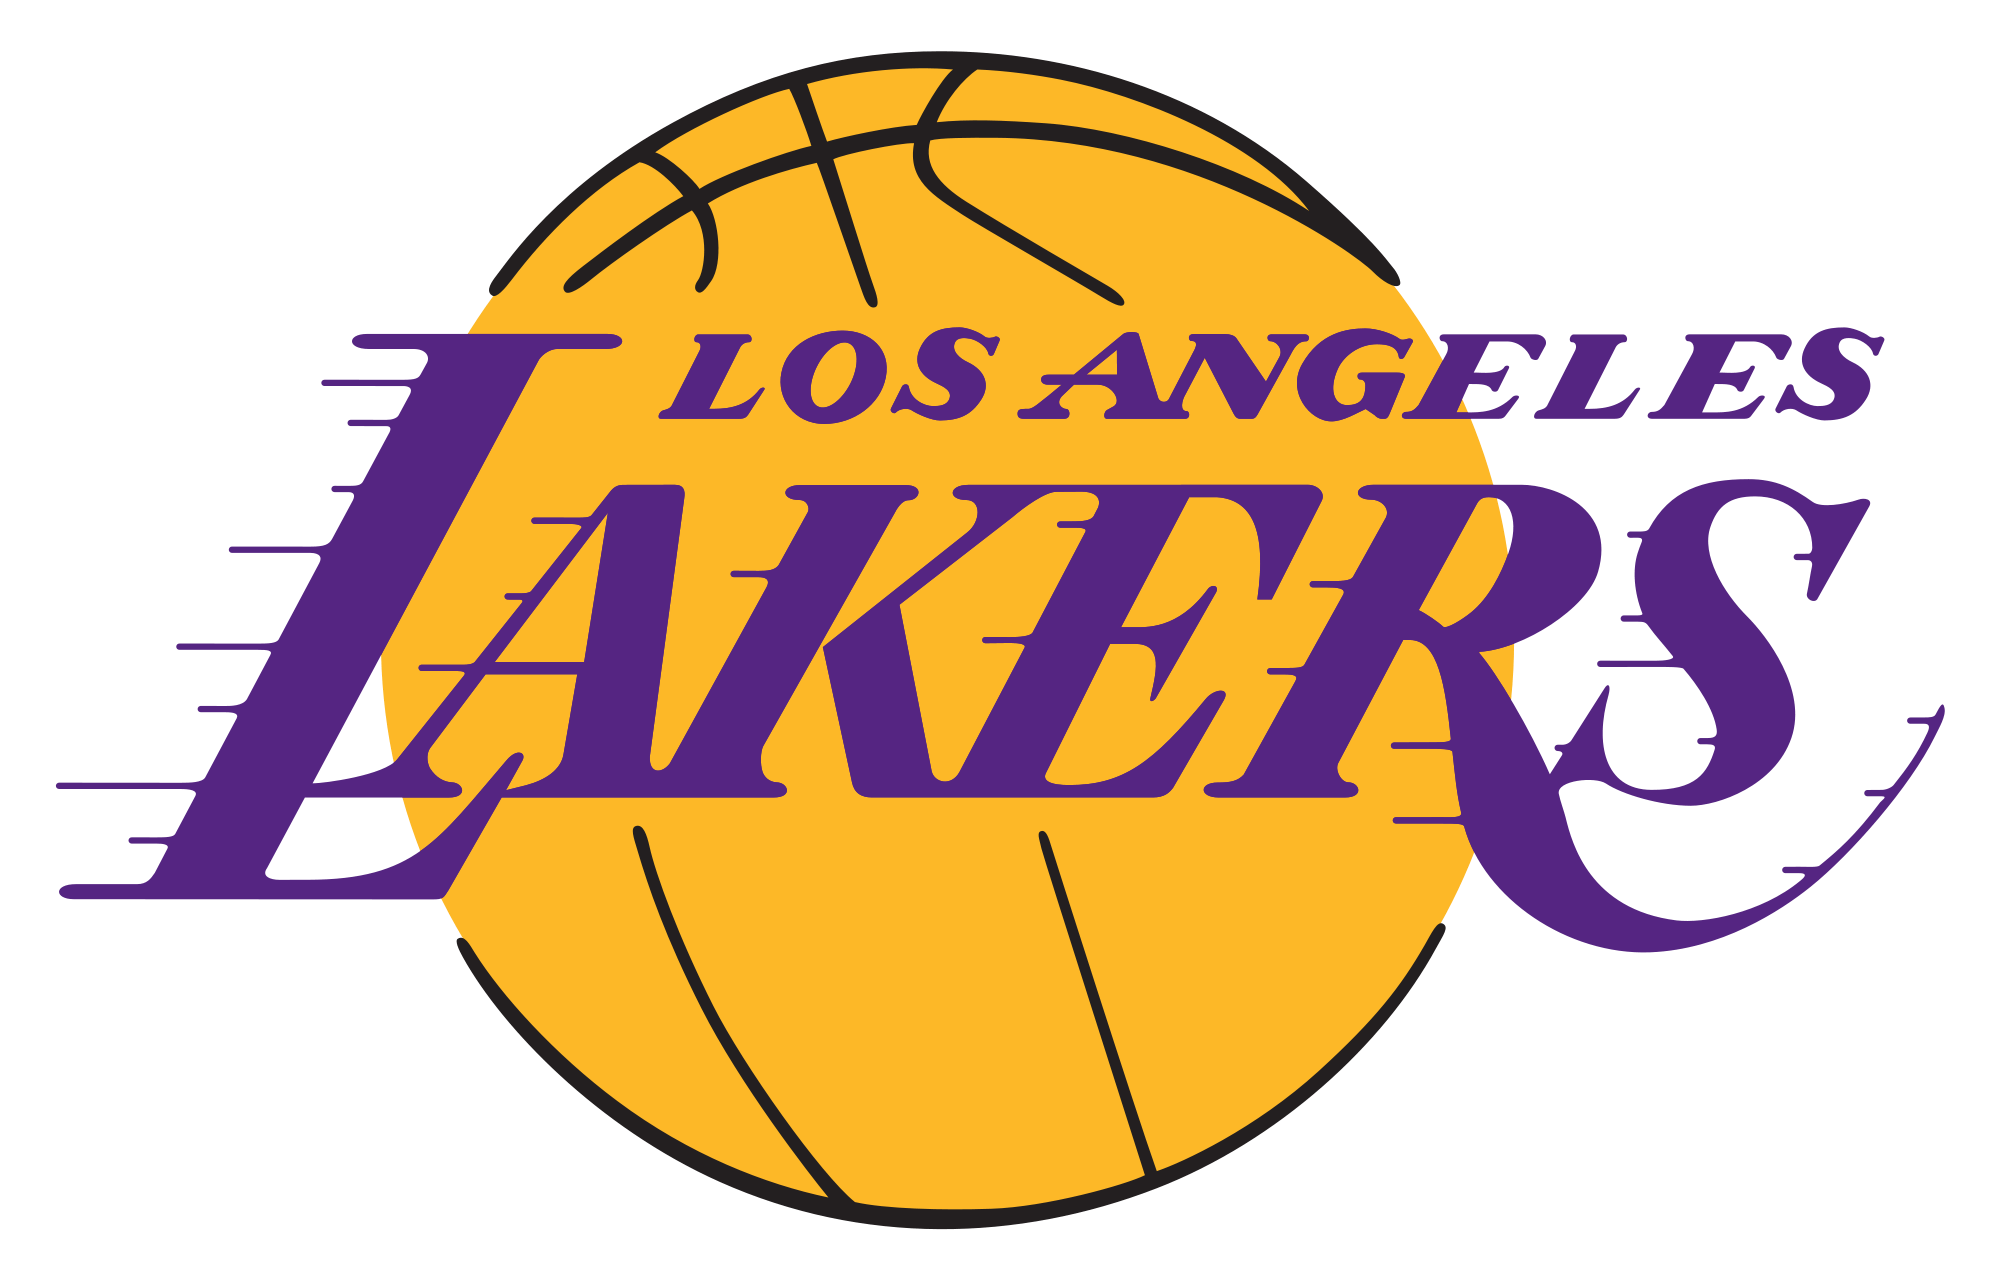 Los Angeles Lakers Logo transparent PNG.